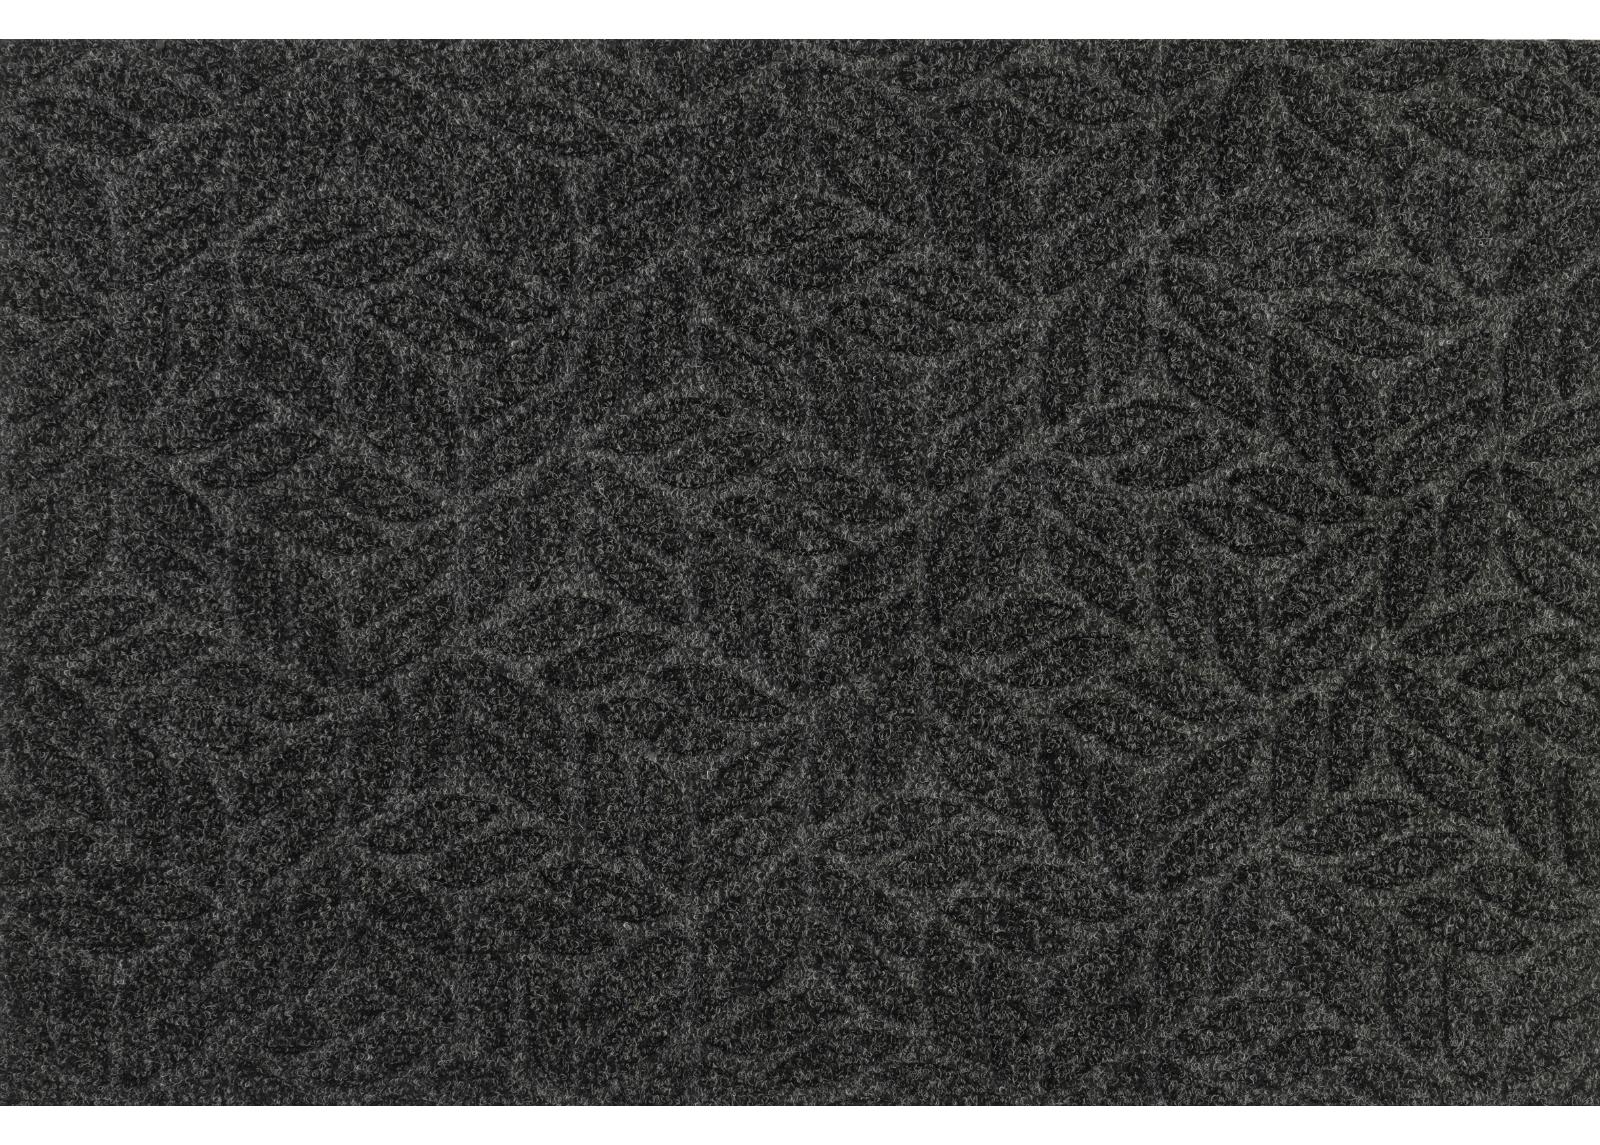 Ovimatto Dune Leaves dark grey 60x90 cm